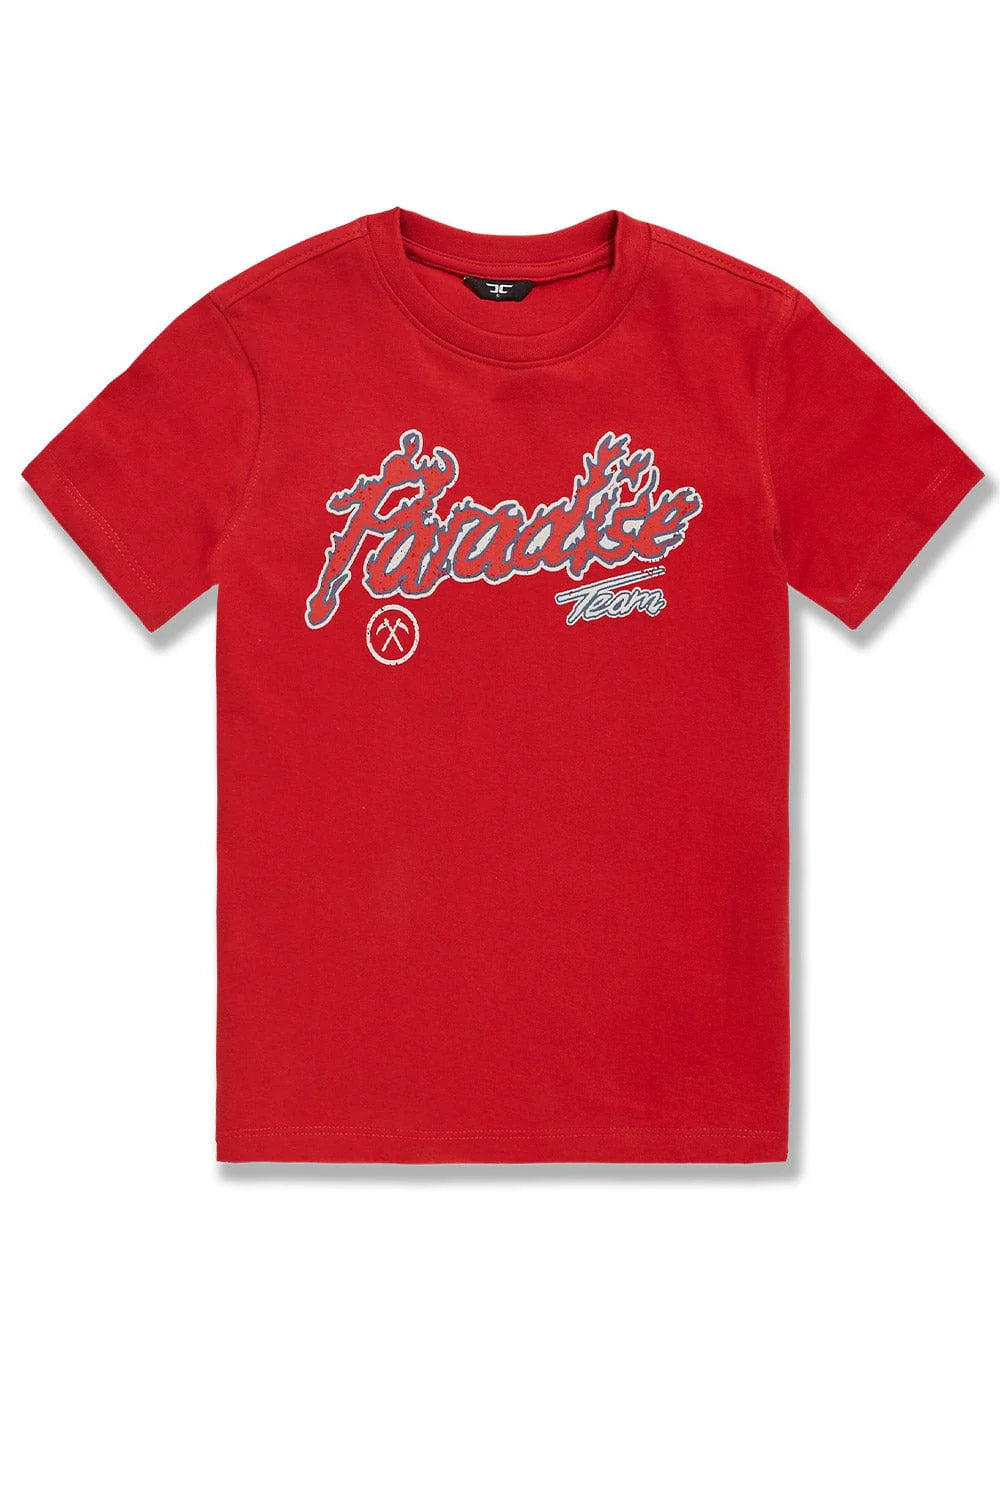 Jordan Craig -Kids Paradise Tour T-Shirt -Red